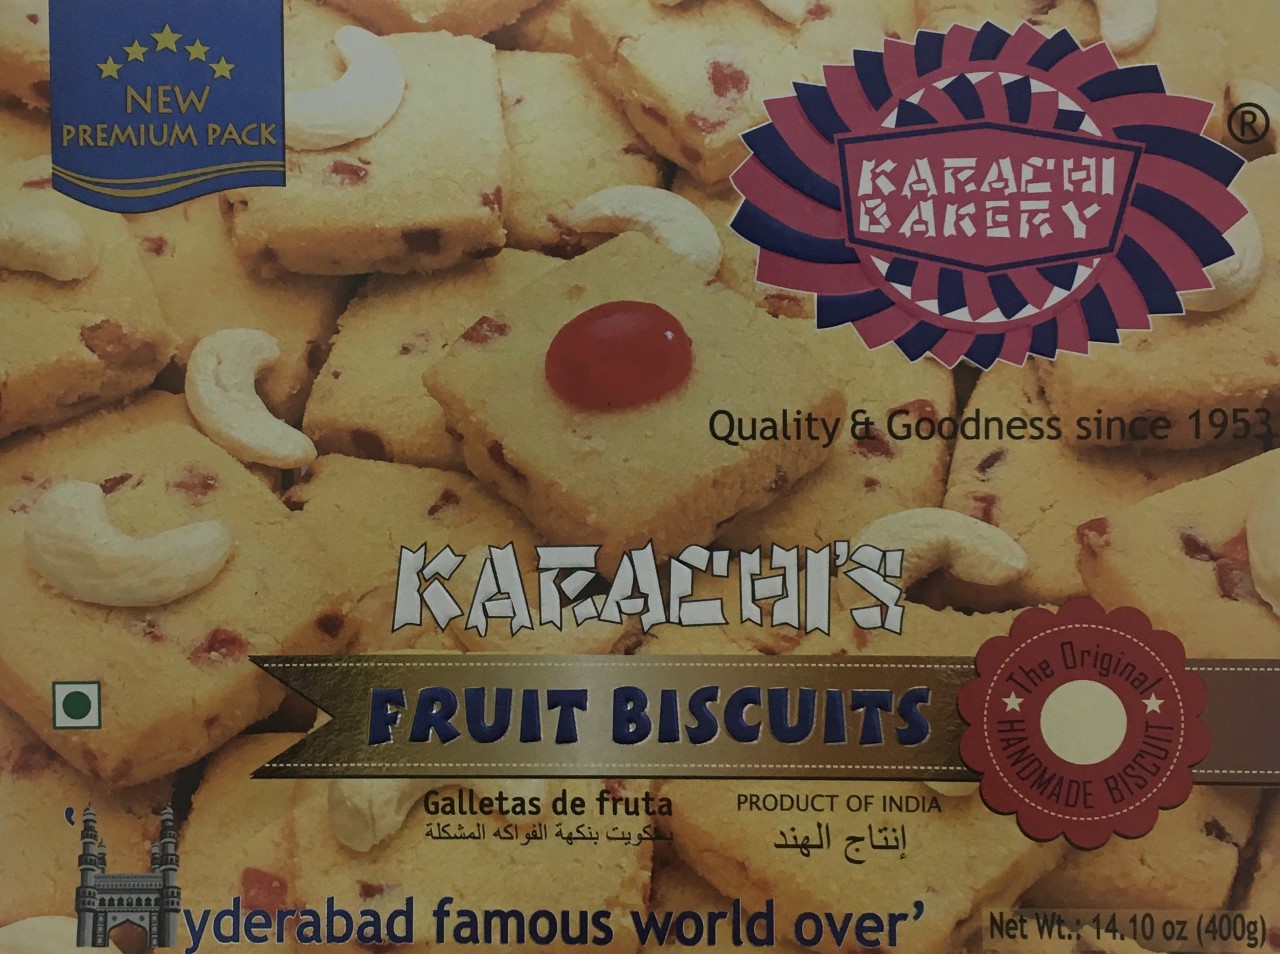 Karachi Bakery Fruit Biscuits 14.10 oz